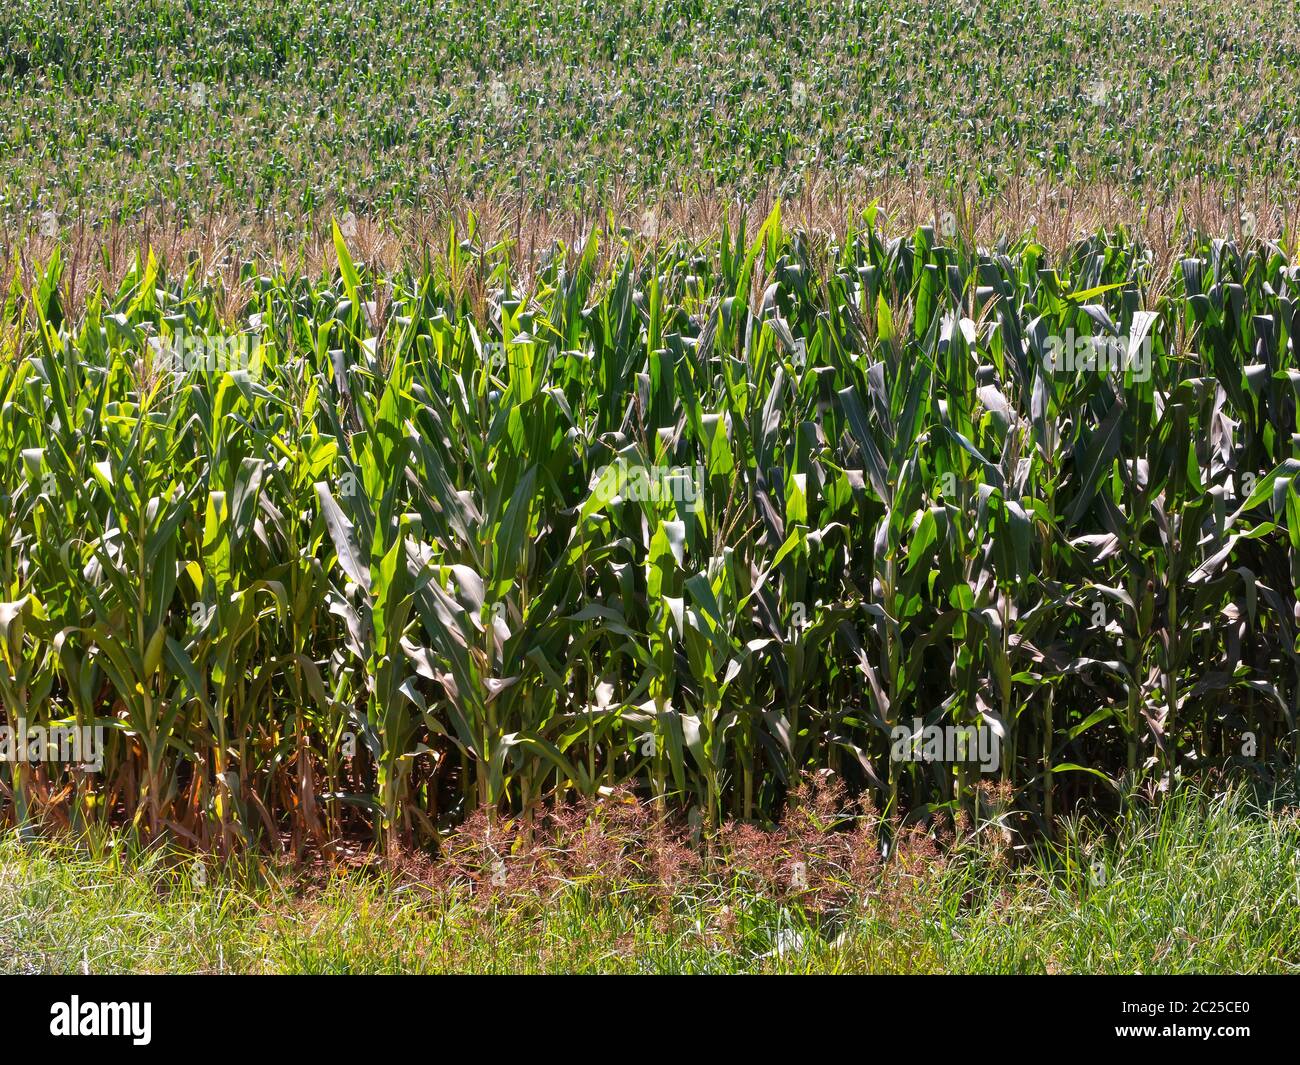 Corn field plantation in Brazil Stock Photo